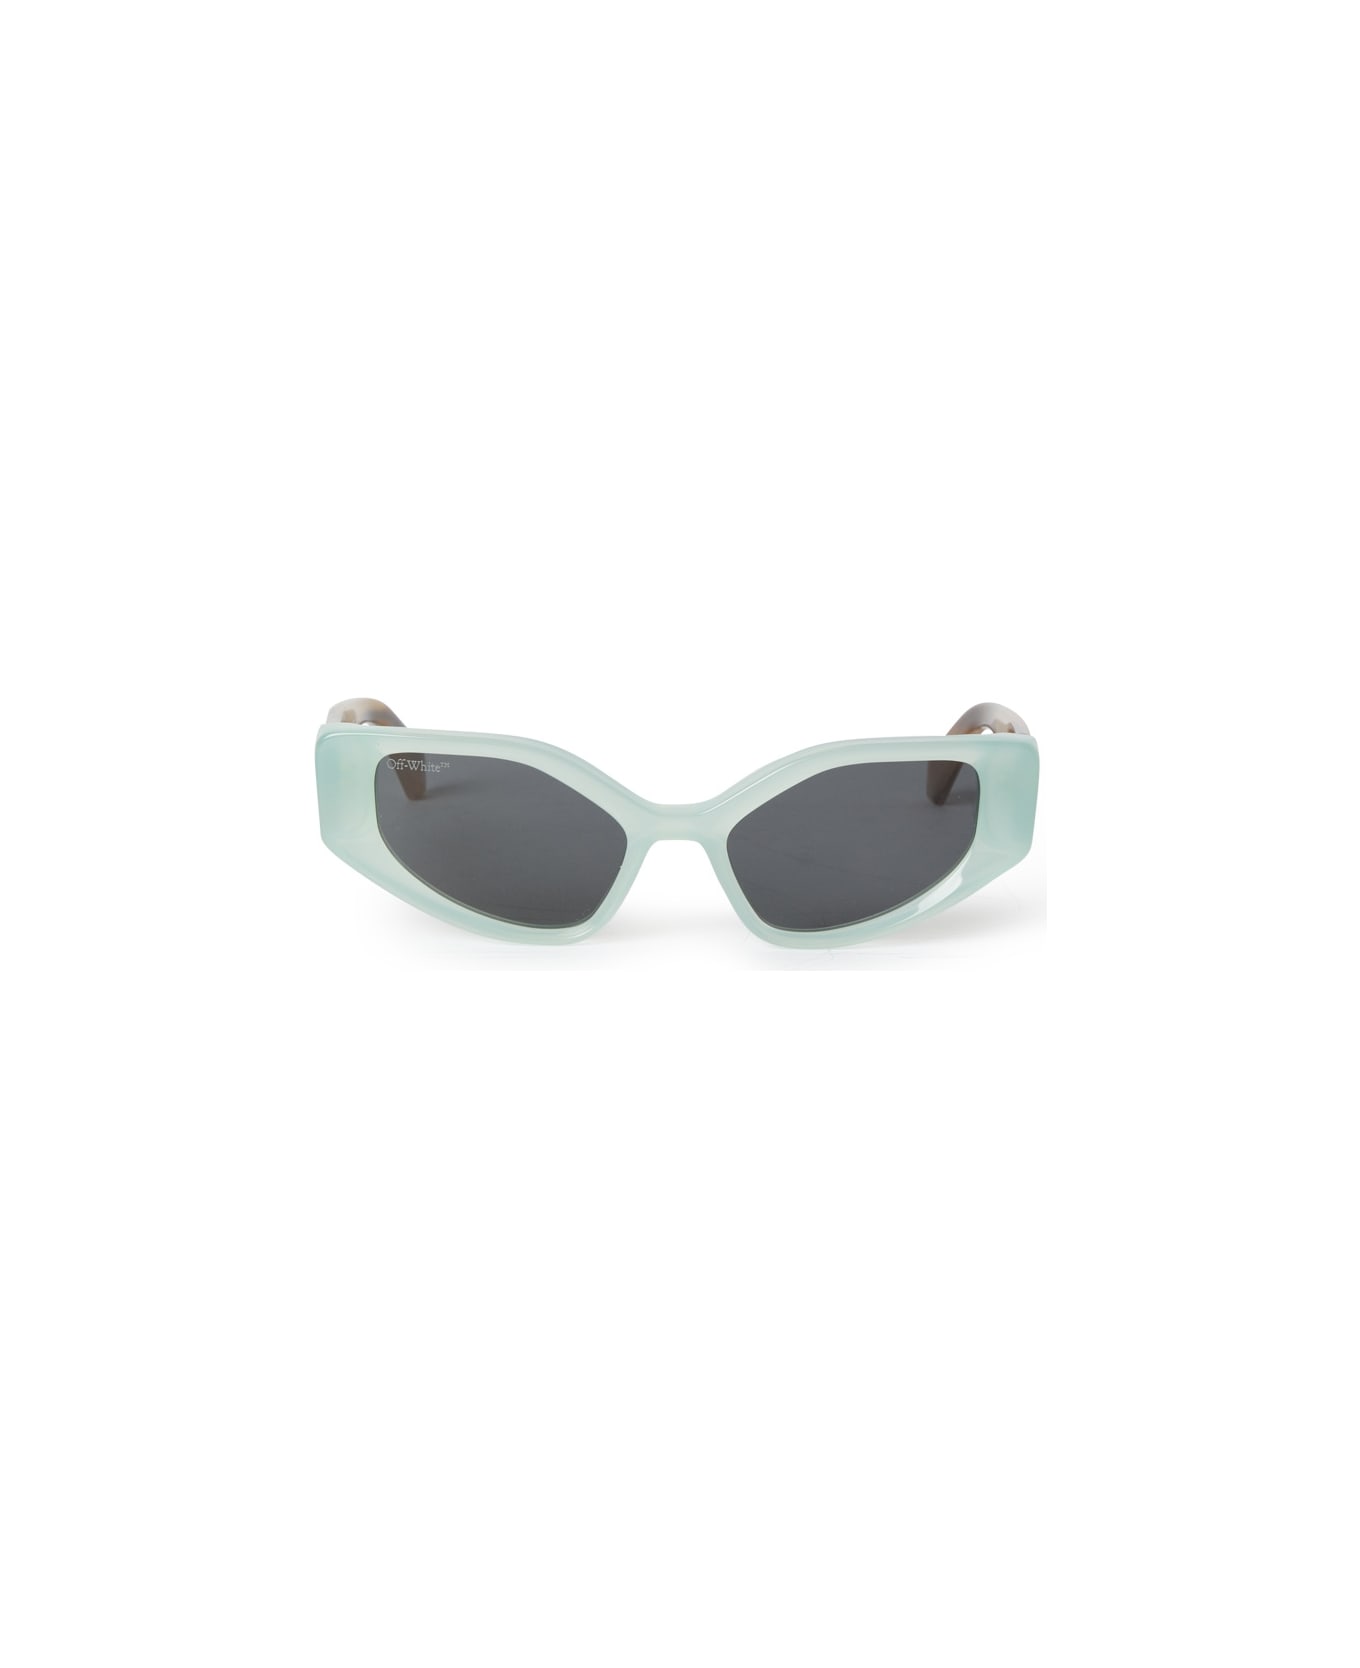 Off-White MEMPHIS SUNGLASSES Sunglasses - Teal サングラス